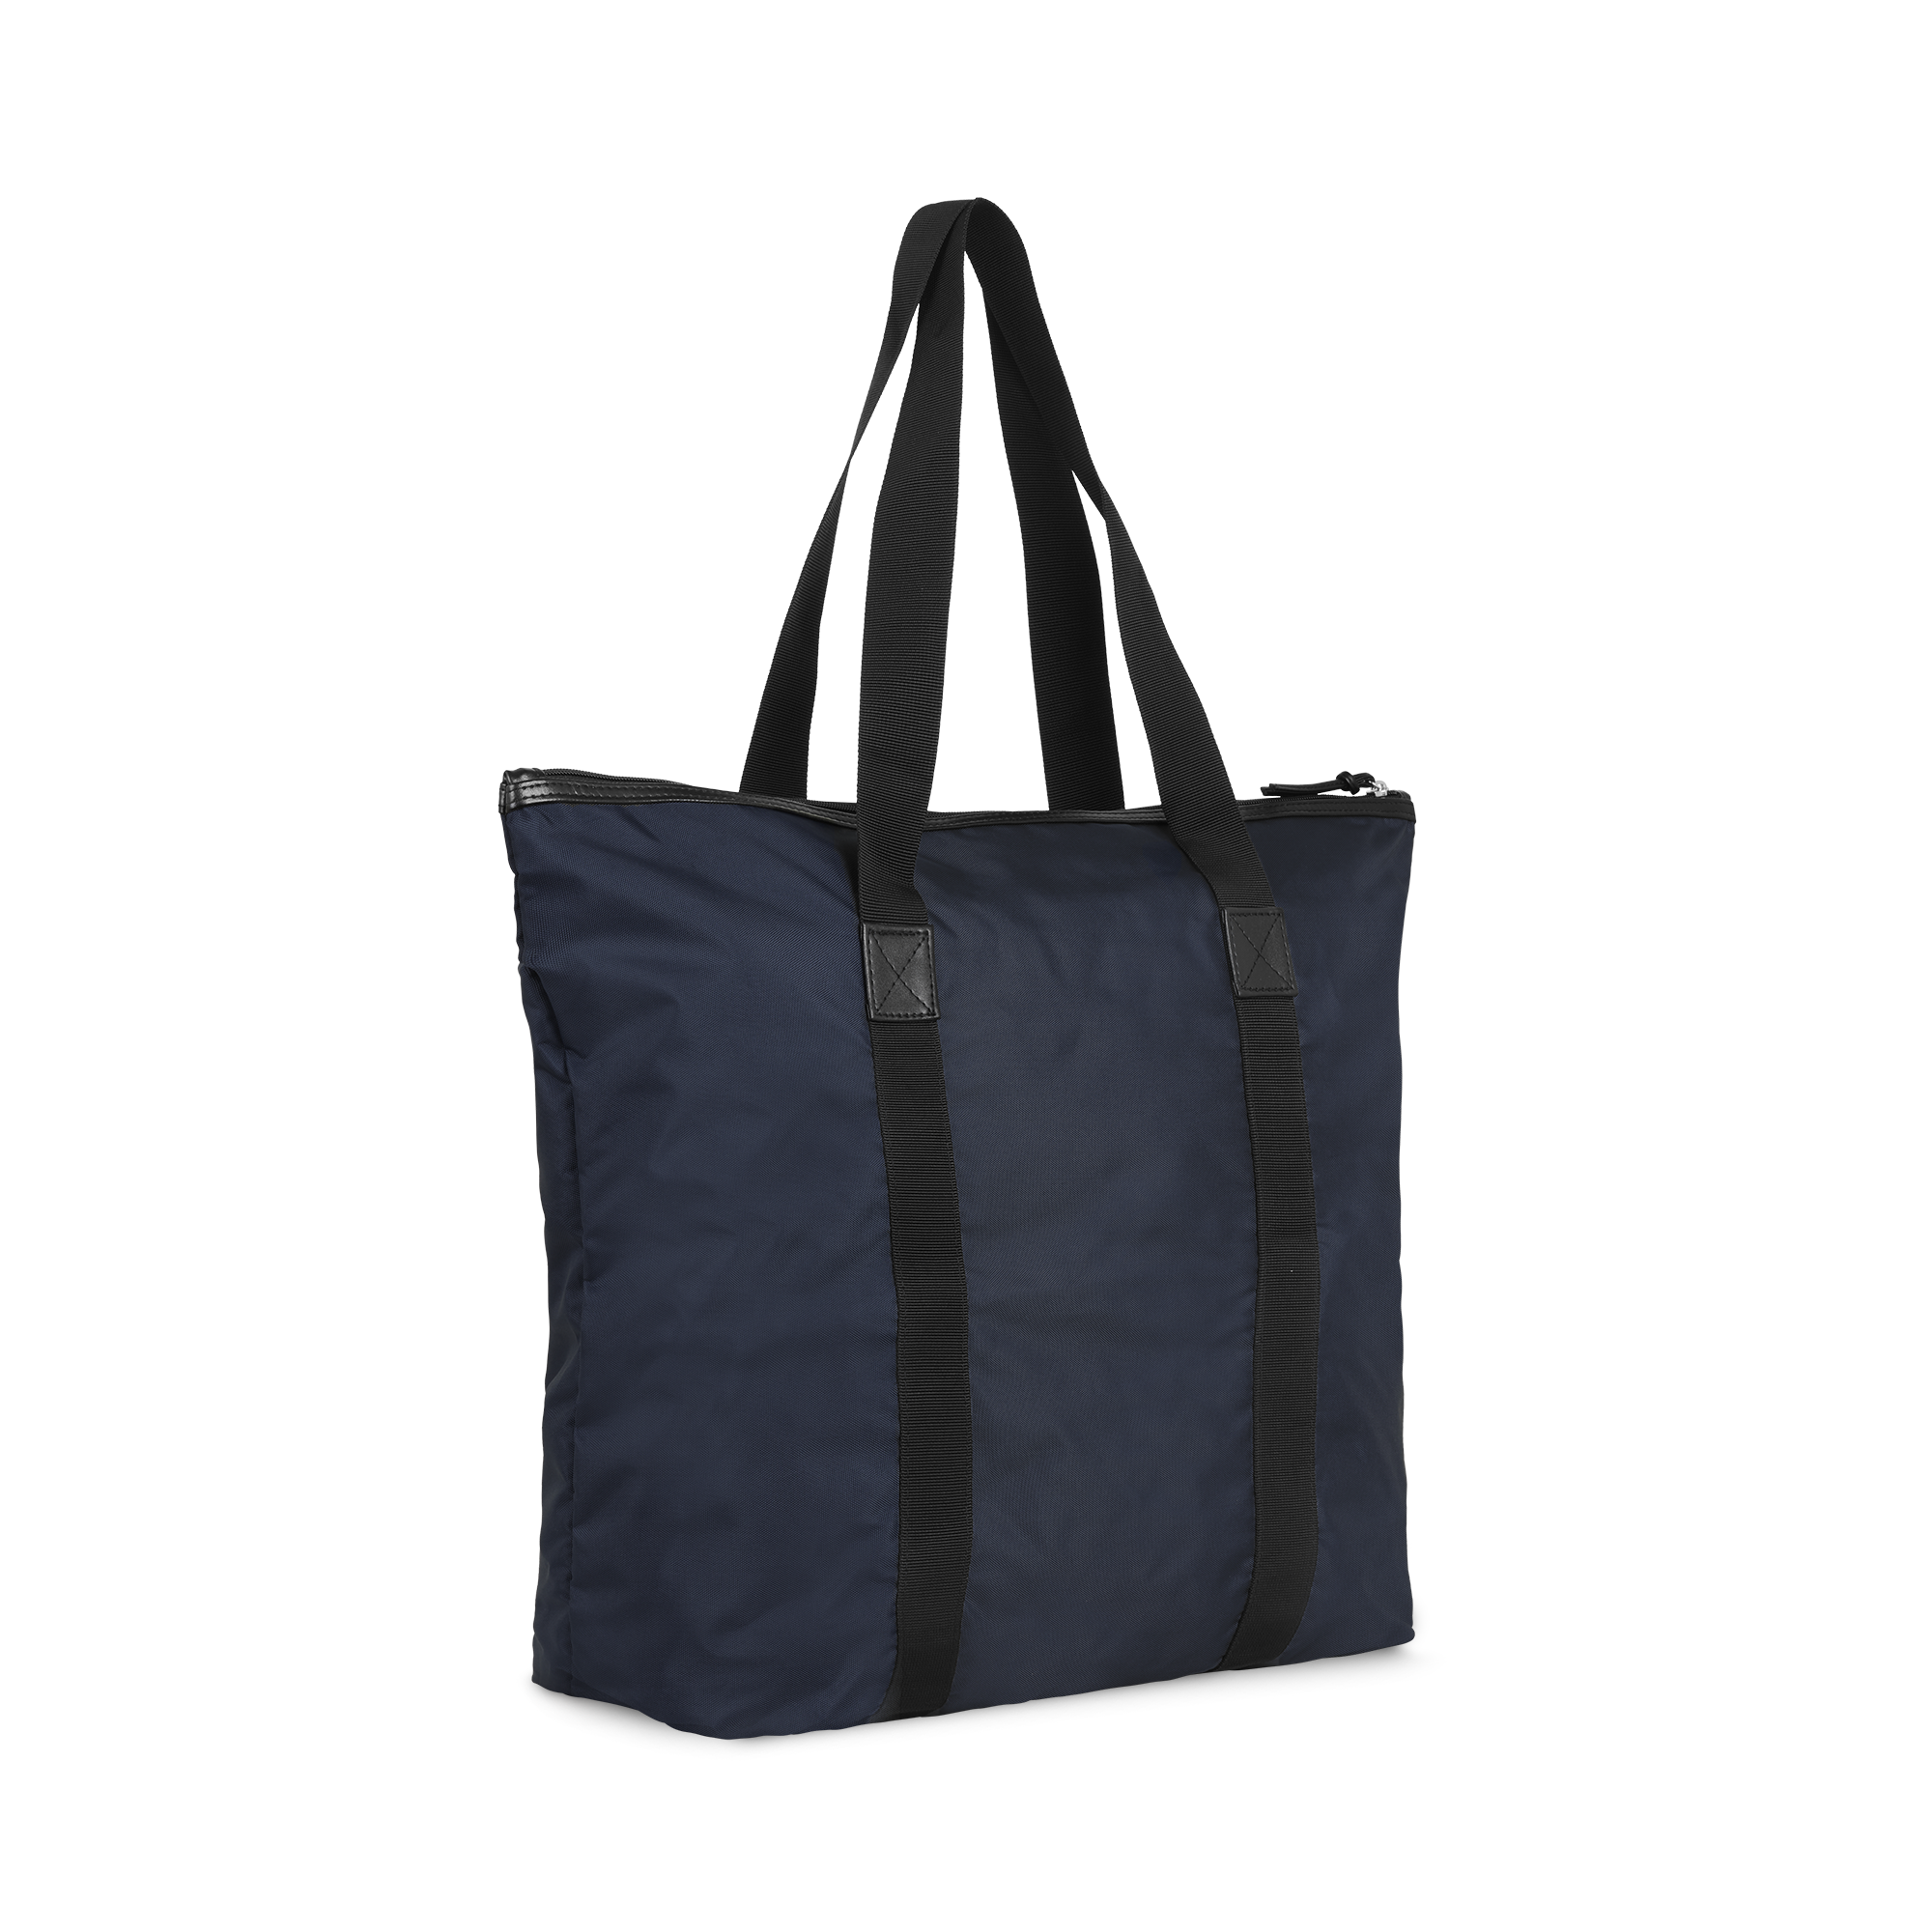 Bag / Veske | Stor | Mørkeblå | Bærekraftig | Romslig Hovedrom | Navy Blazer | Gwenneth Re-S